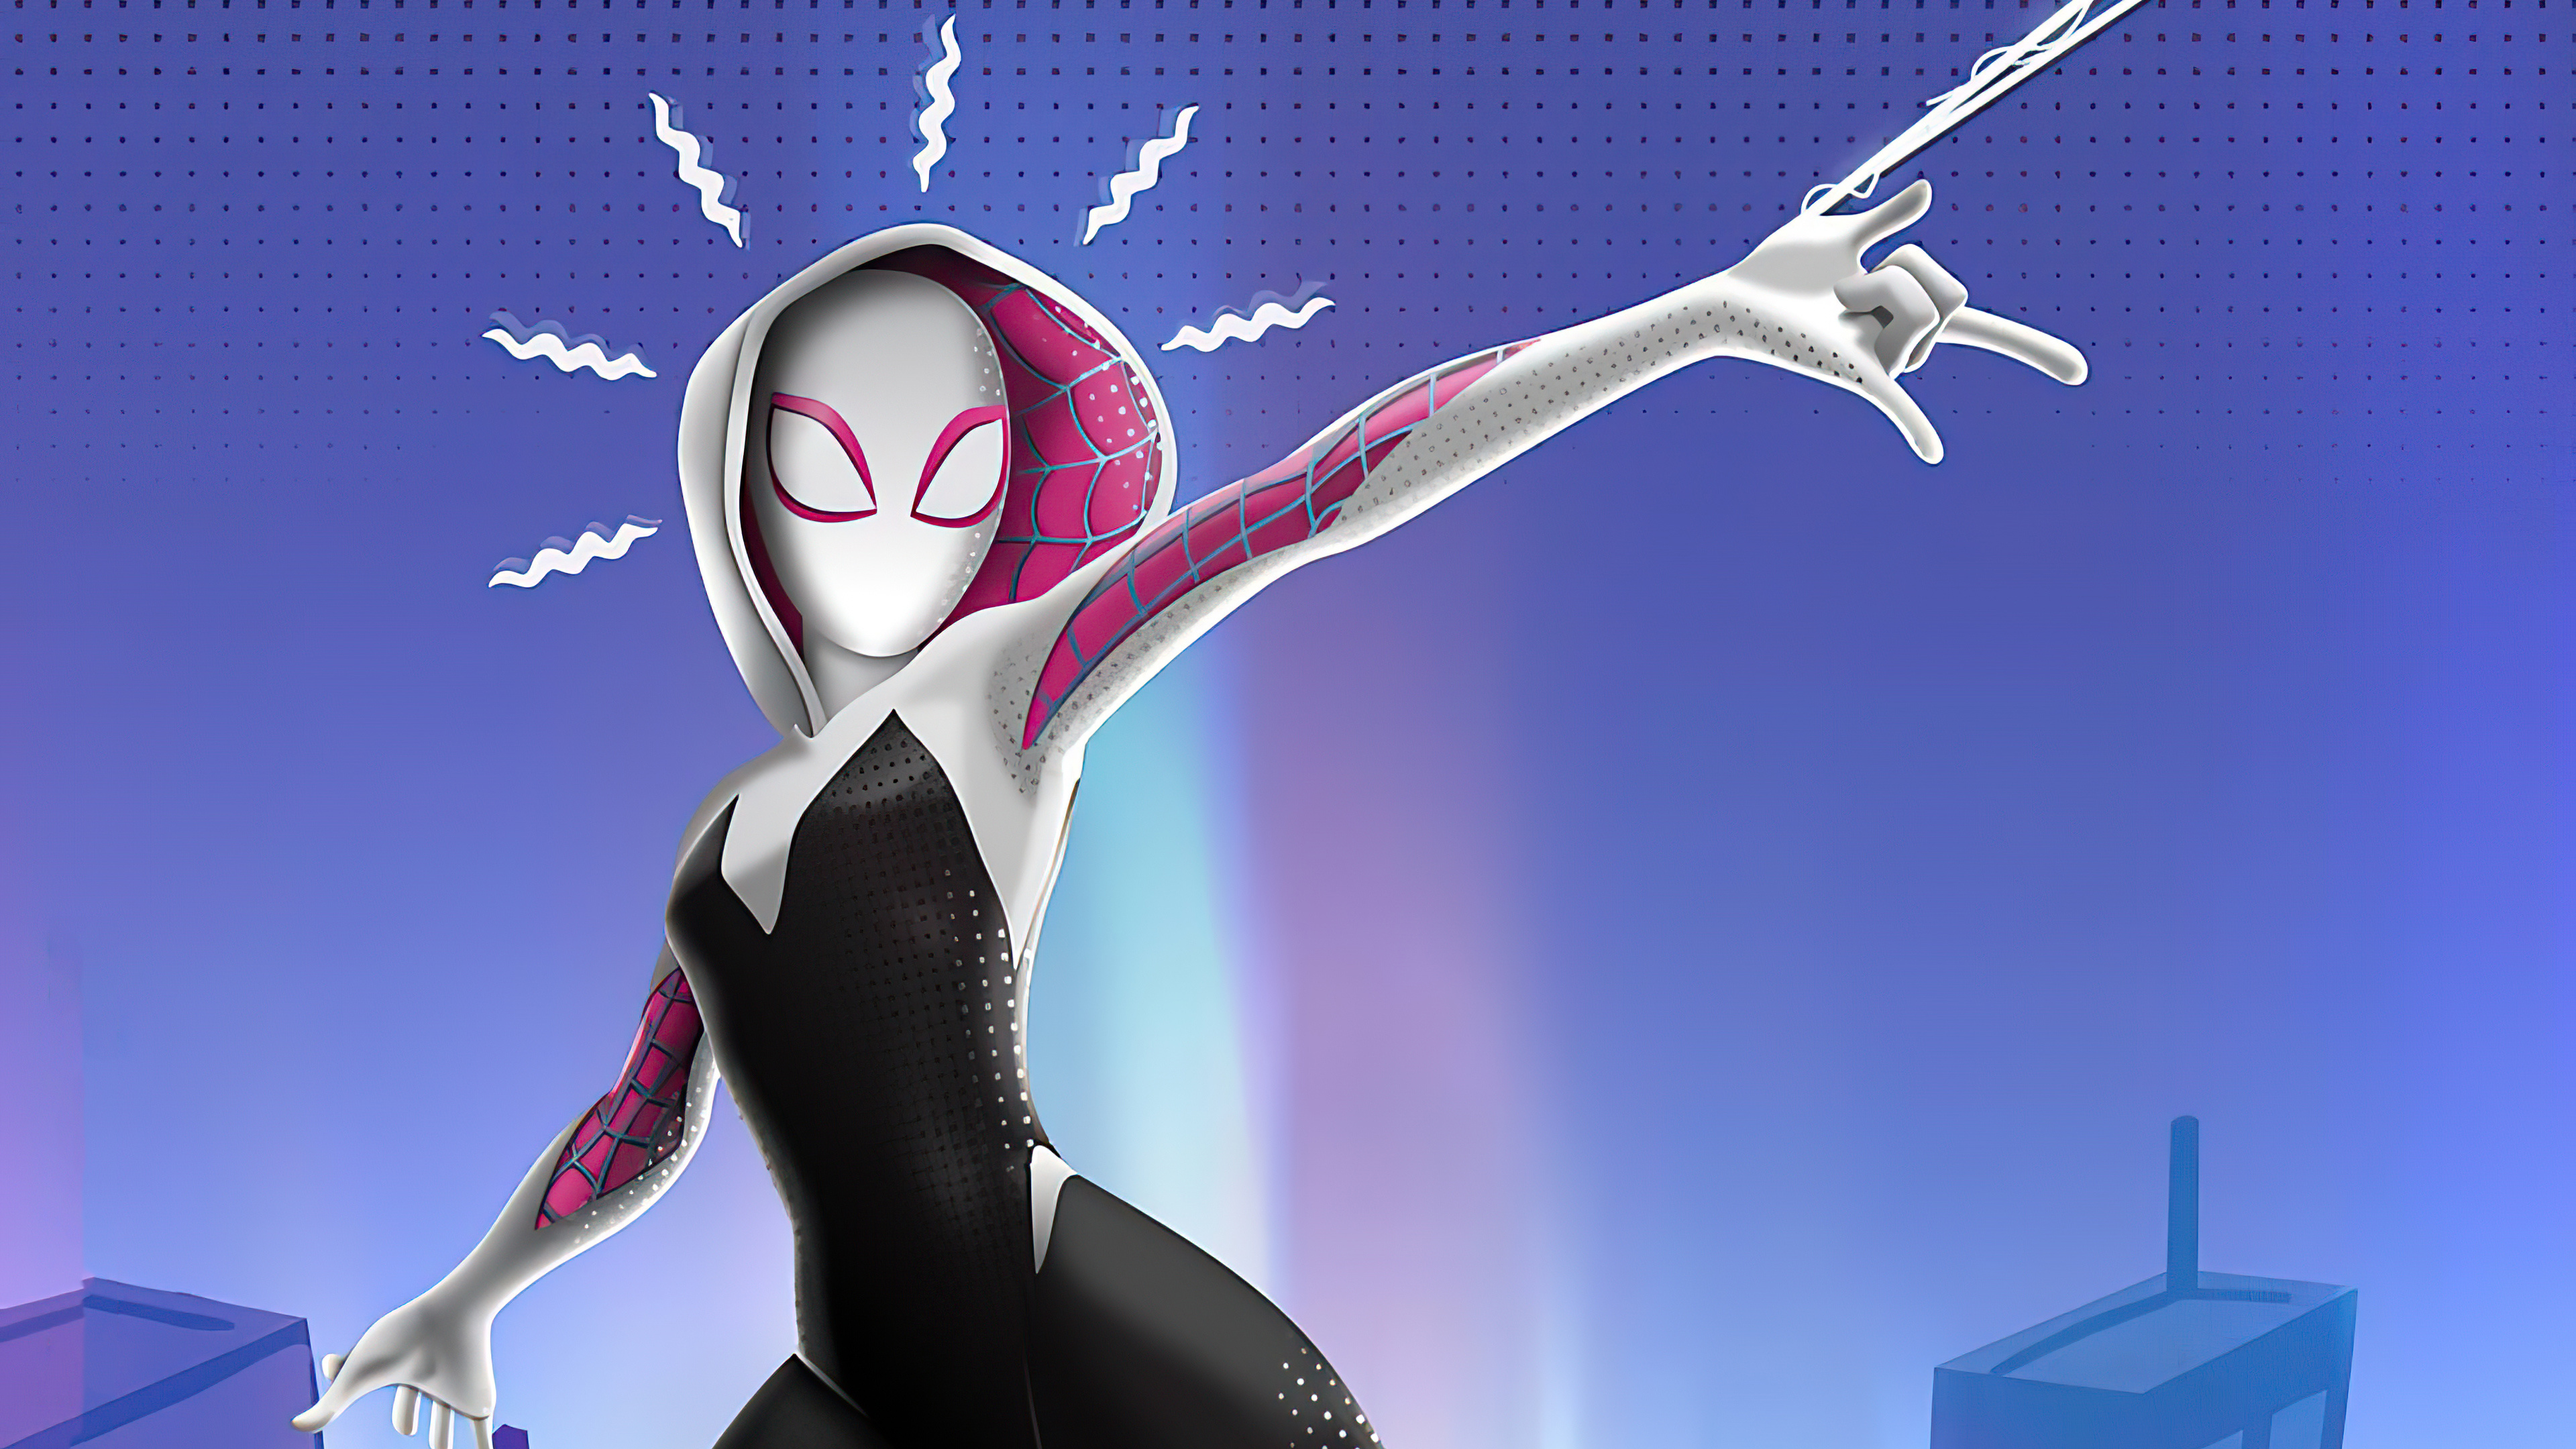 Ultra HD wallpaper, Spider Gwen's portrait, Stunning artwork, Epic visuals, 3840x2160 4K Desktop